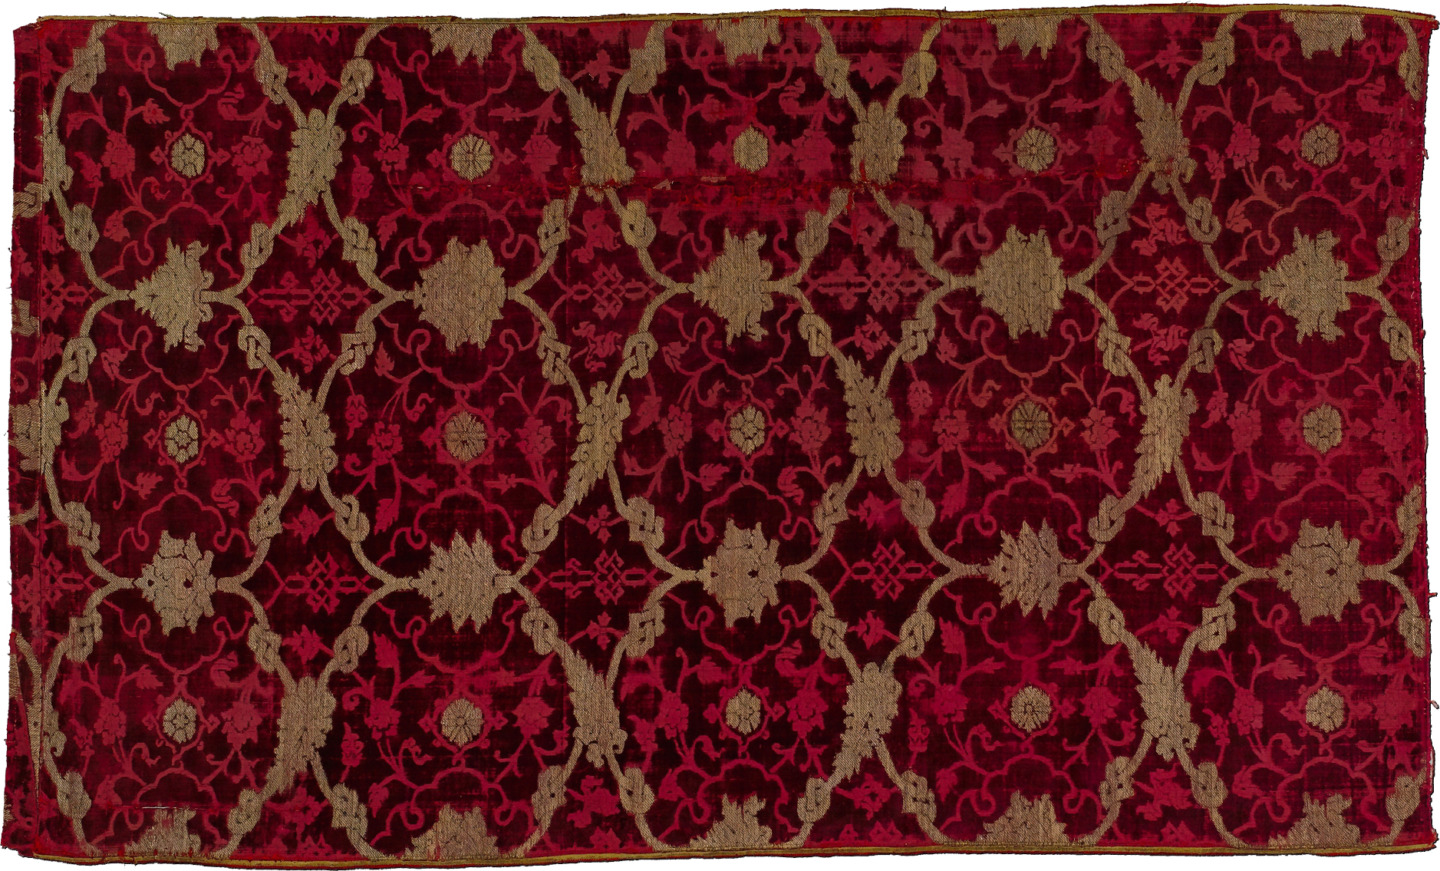 Italian Velvet Textile via The MET Collection